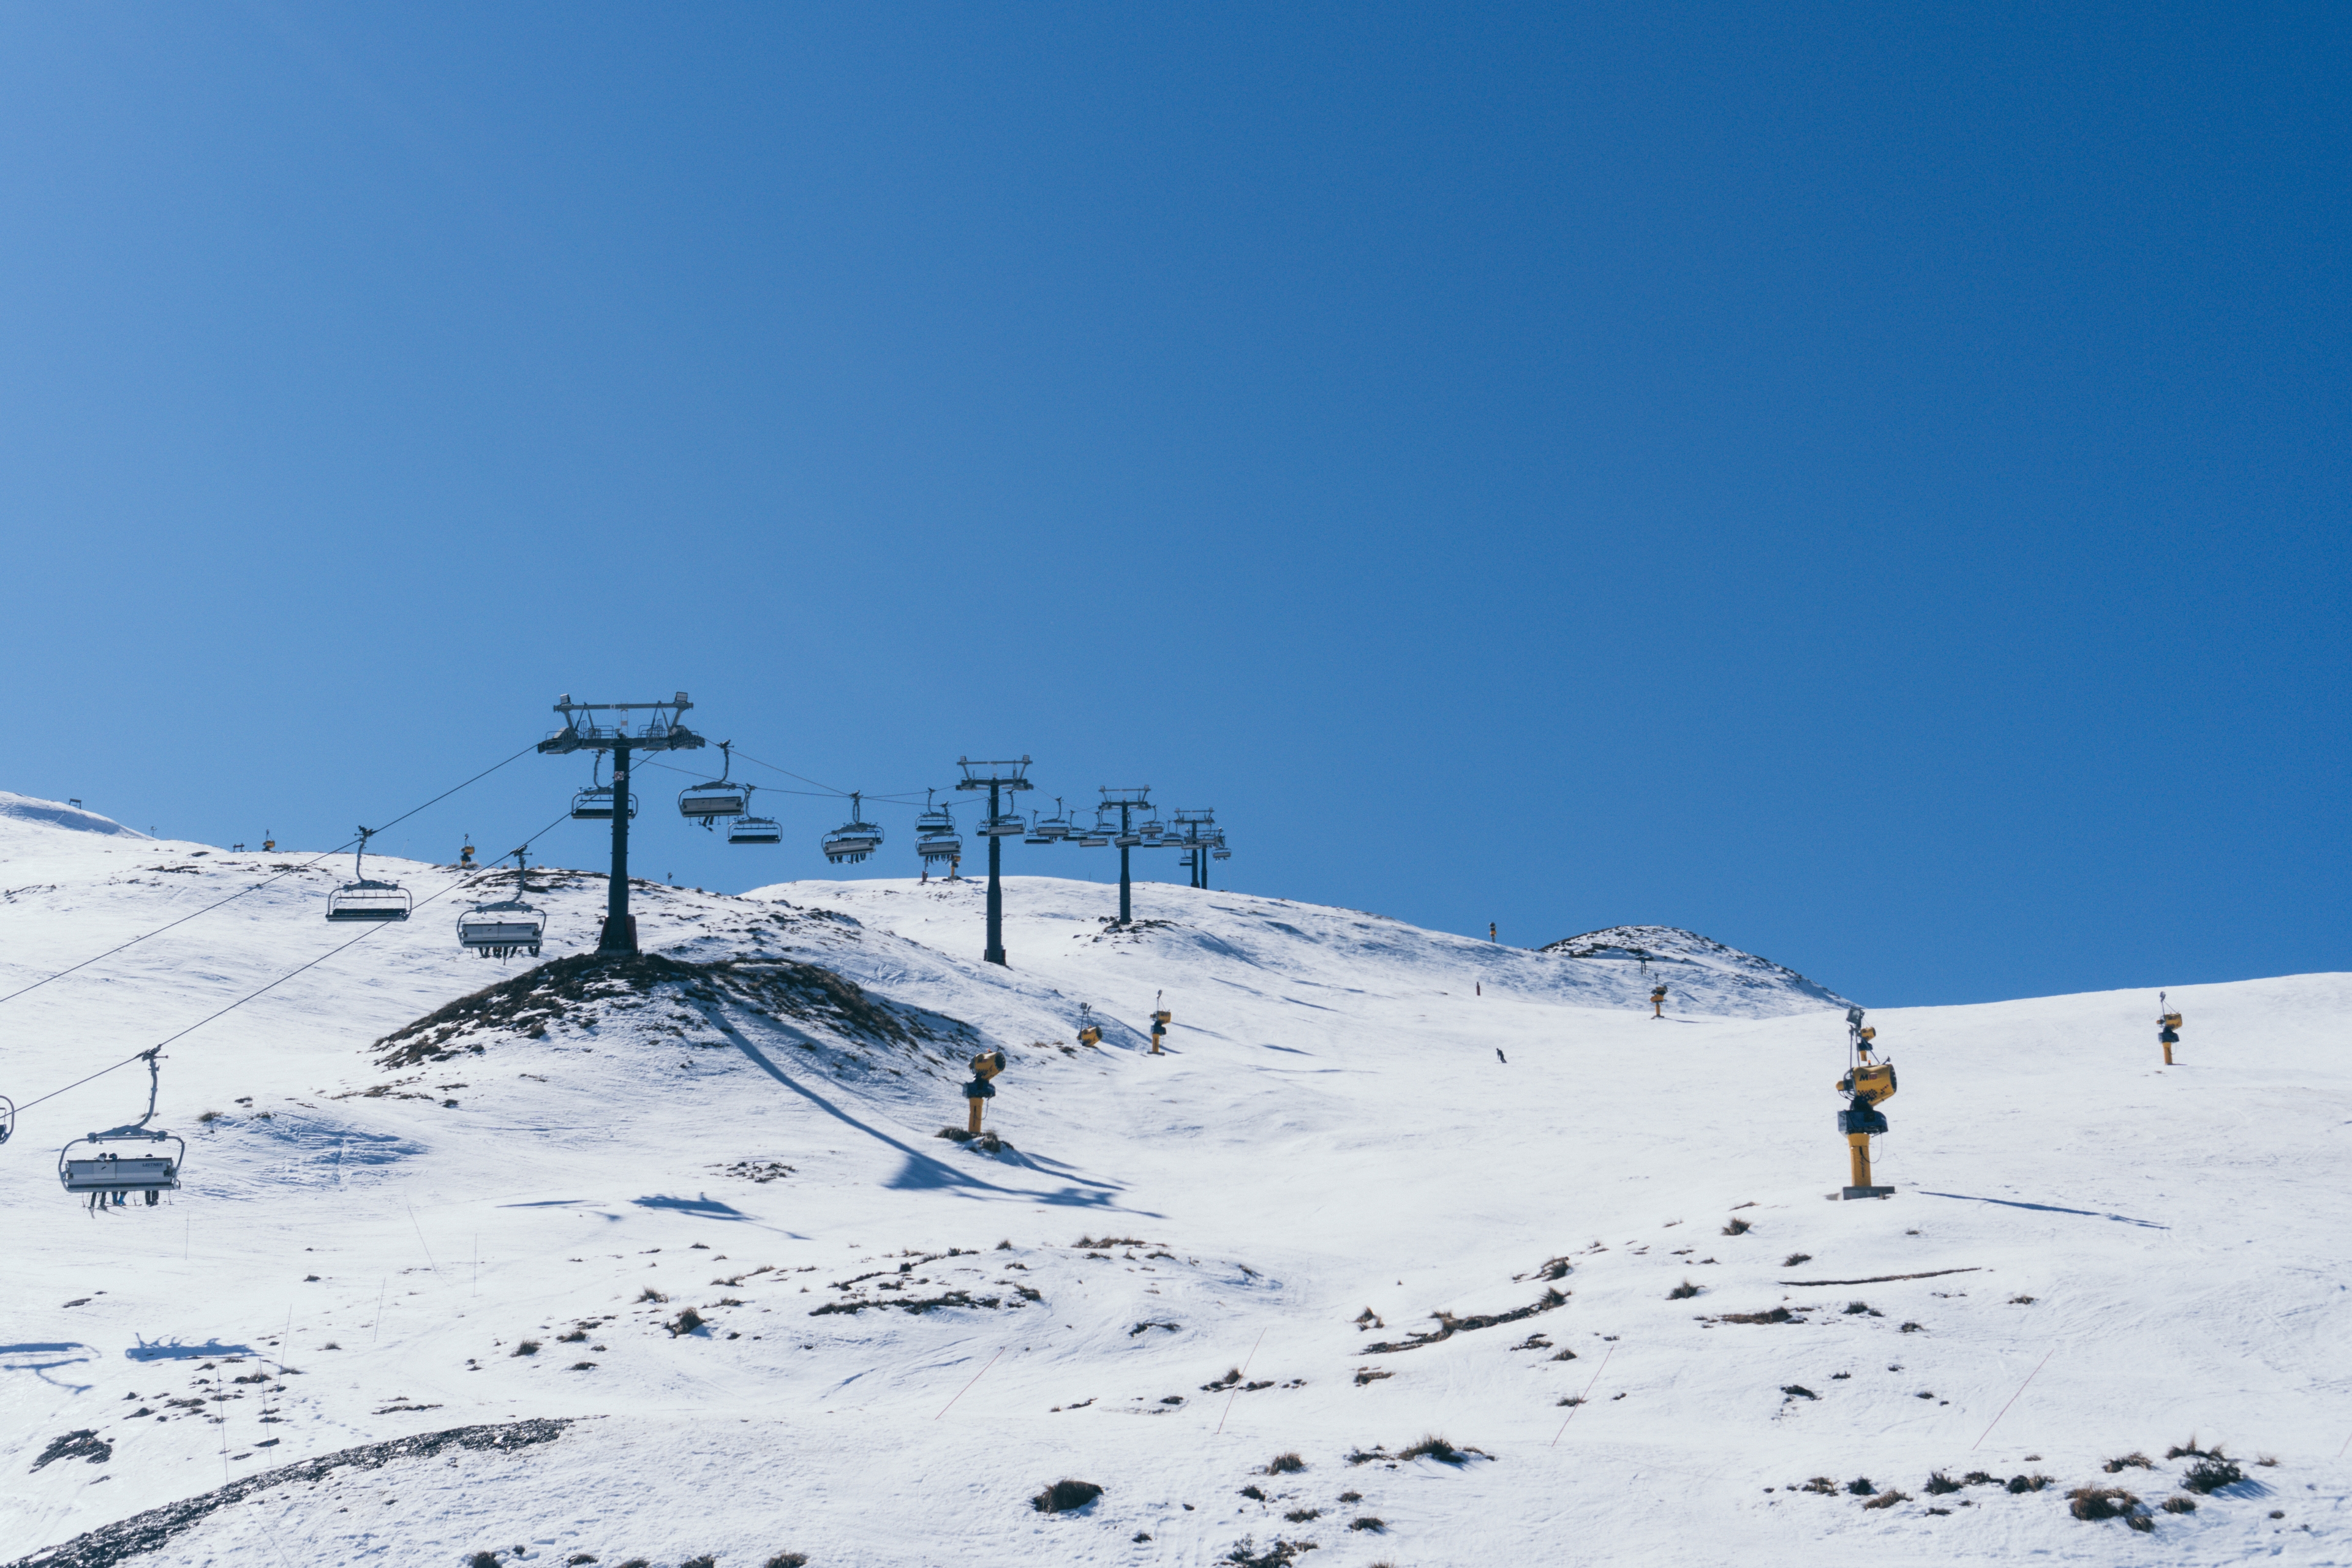 General 3840x2560 spring New Zealand snow mountains ski resort Queenstown winter sky outdoors